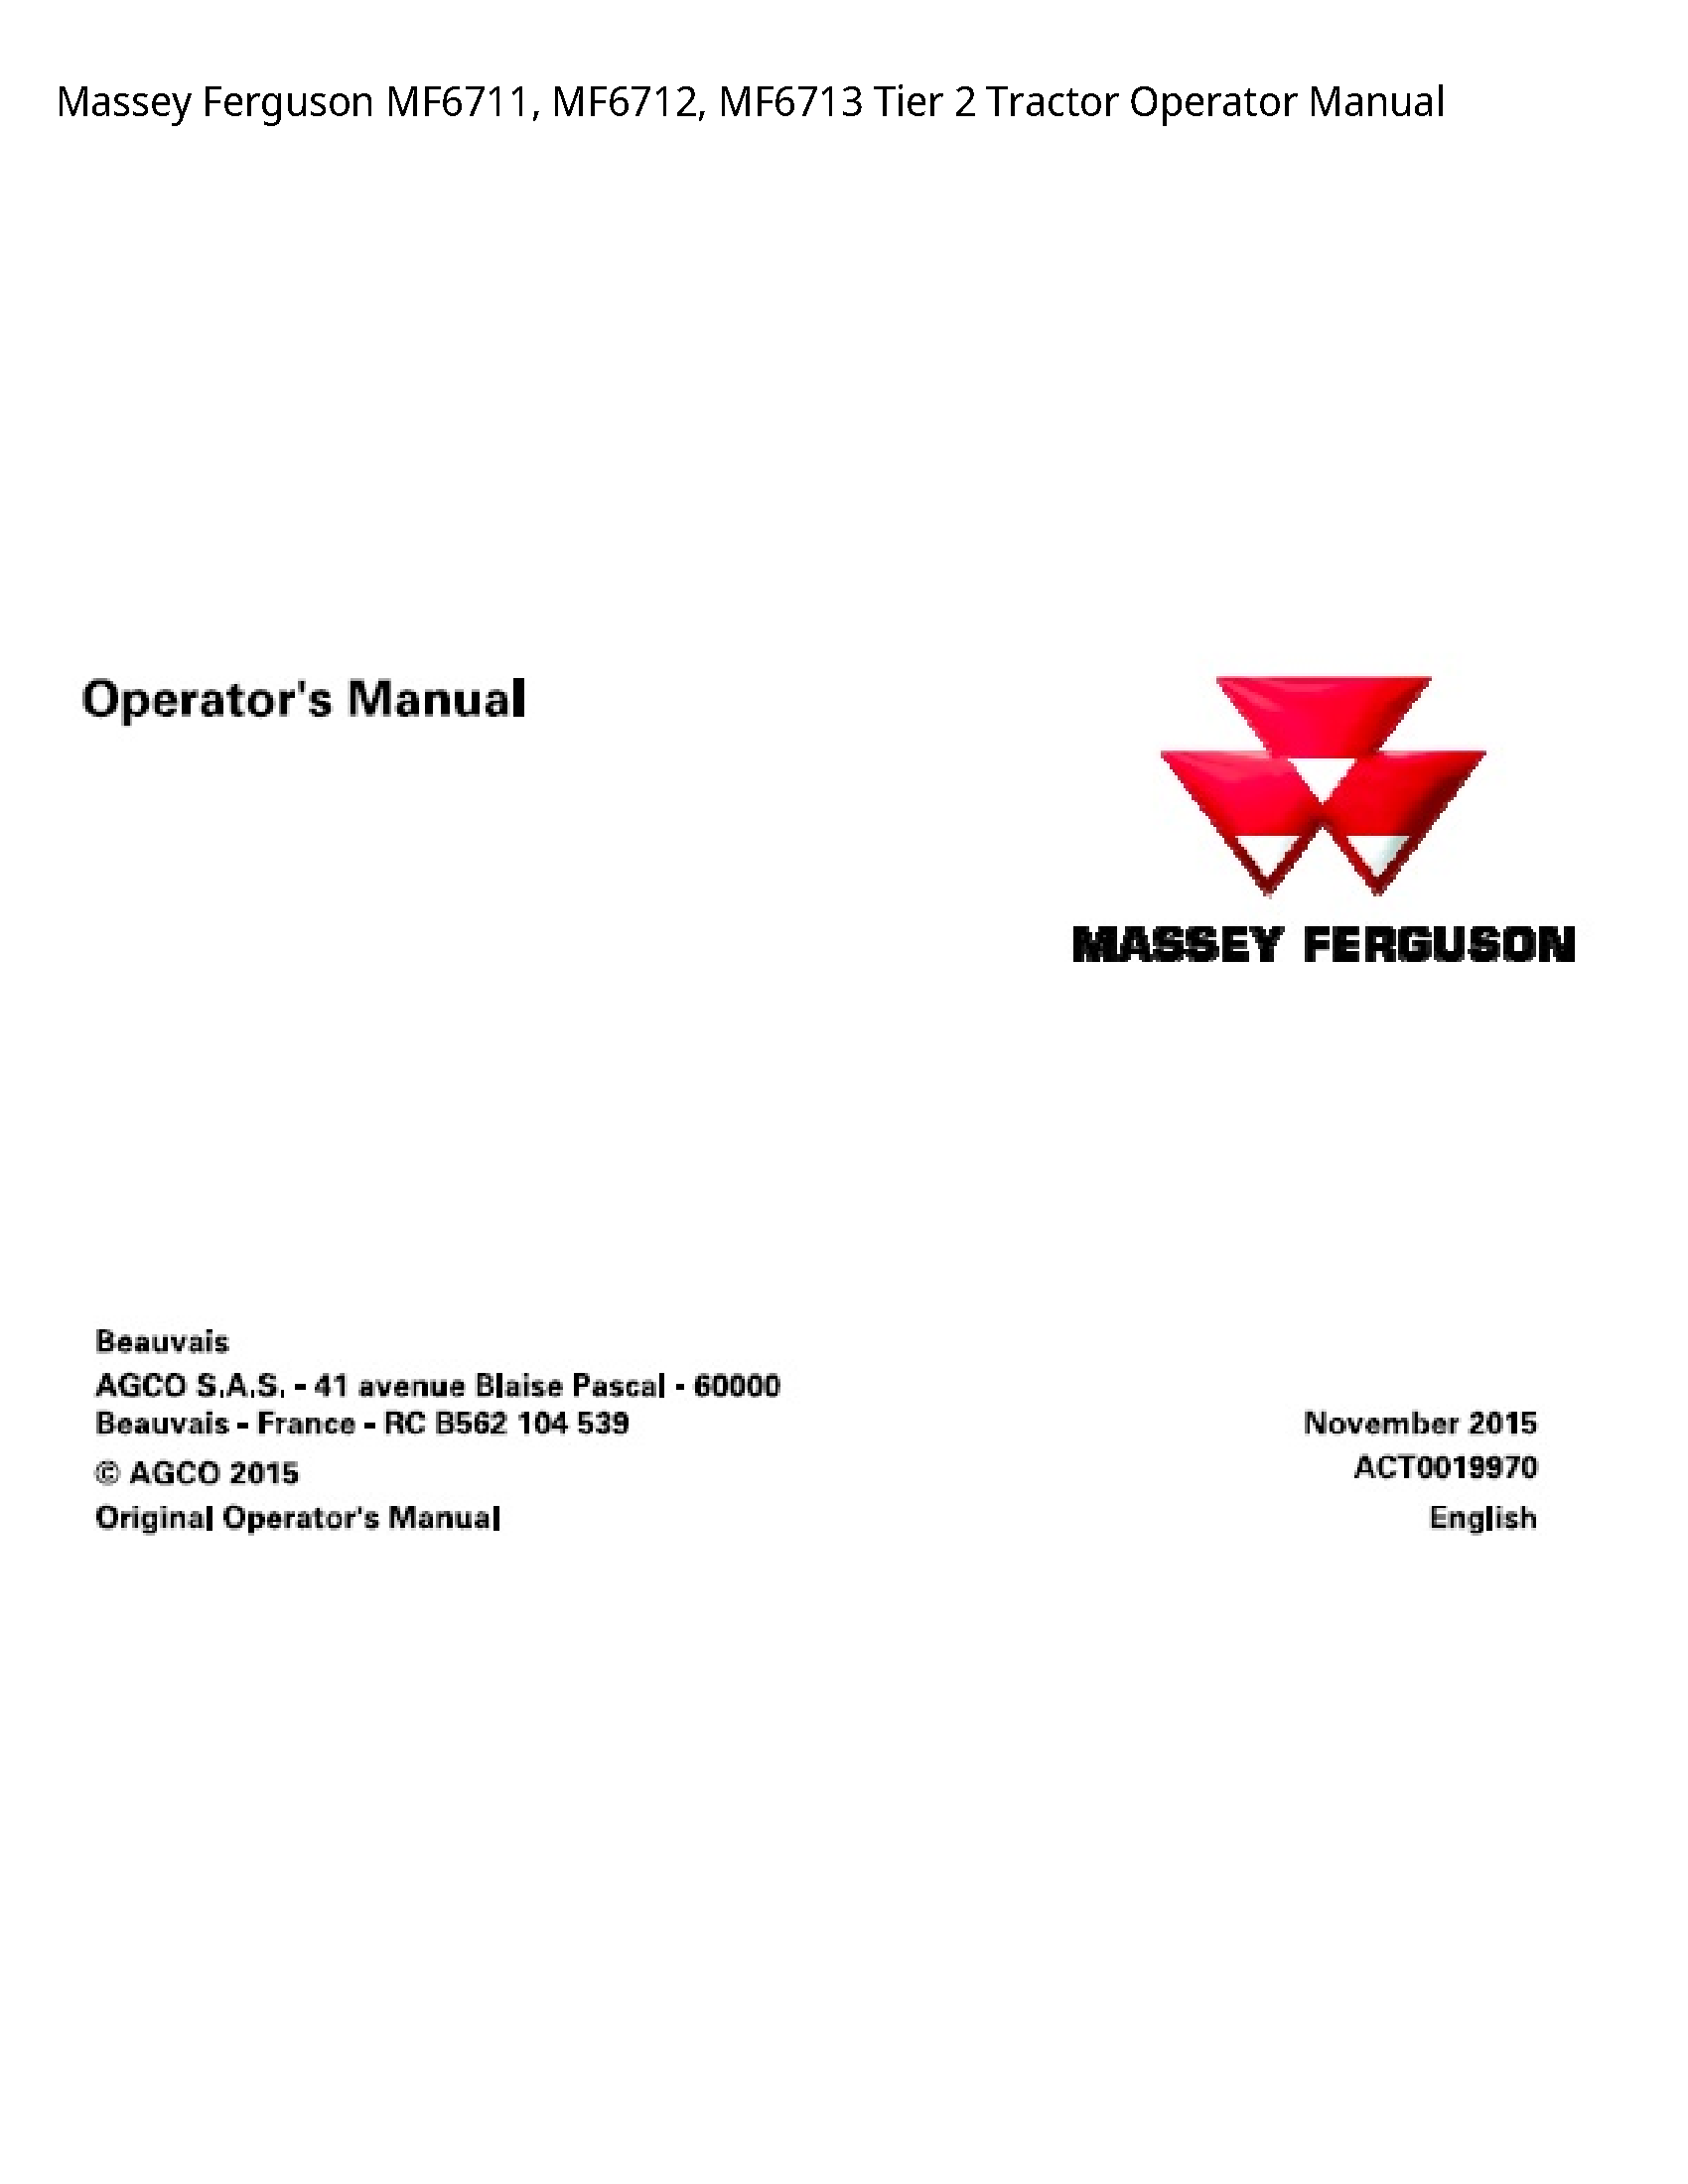 Massey Ferguson MF6711 Tier Tractor Operator manual